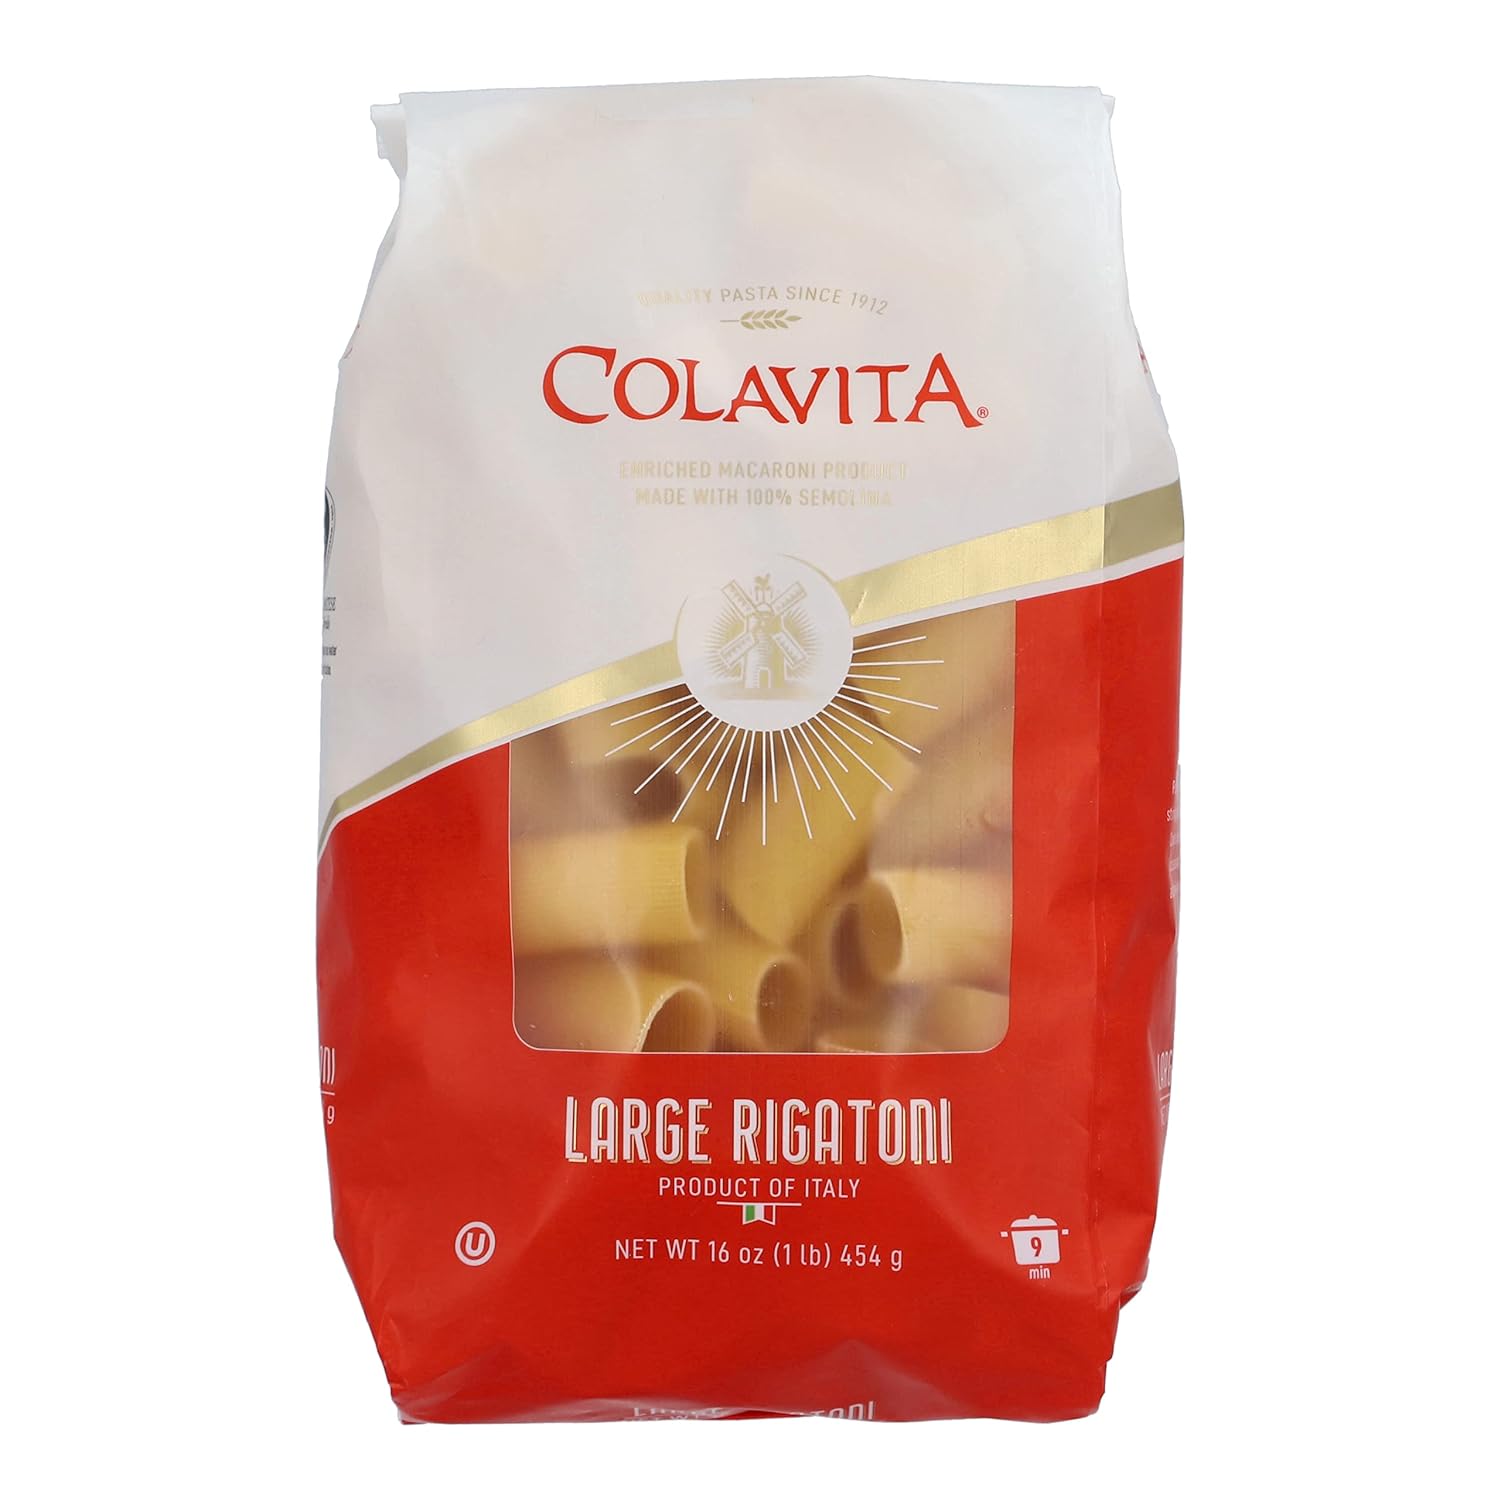 Colavita Pasta - Large Rigatoni, 1 Pound - Pack of 20